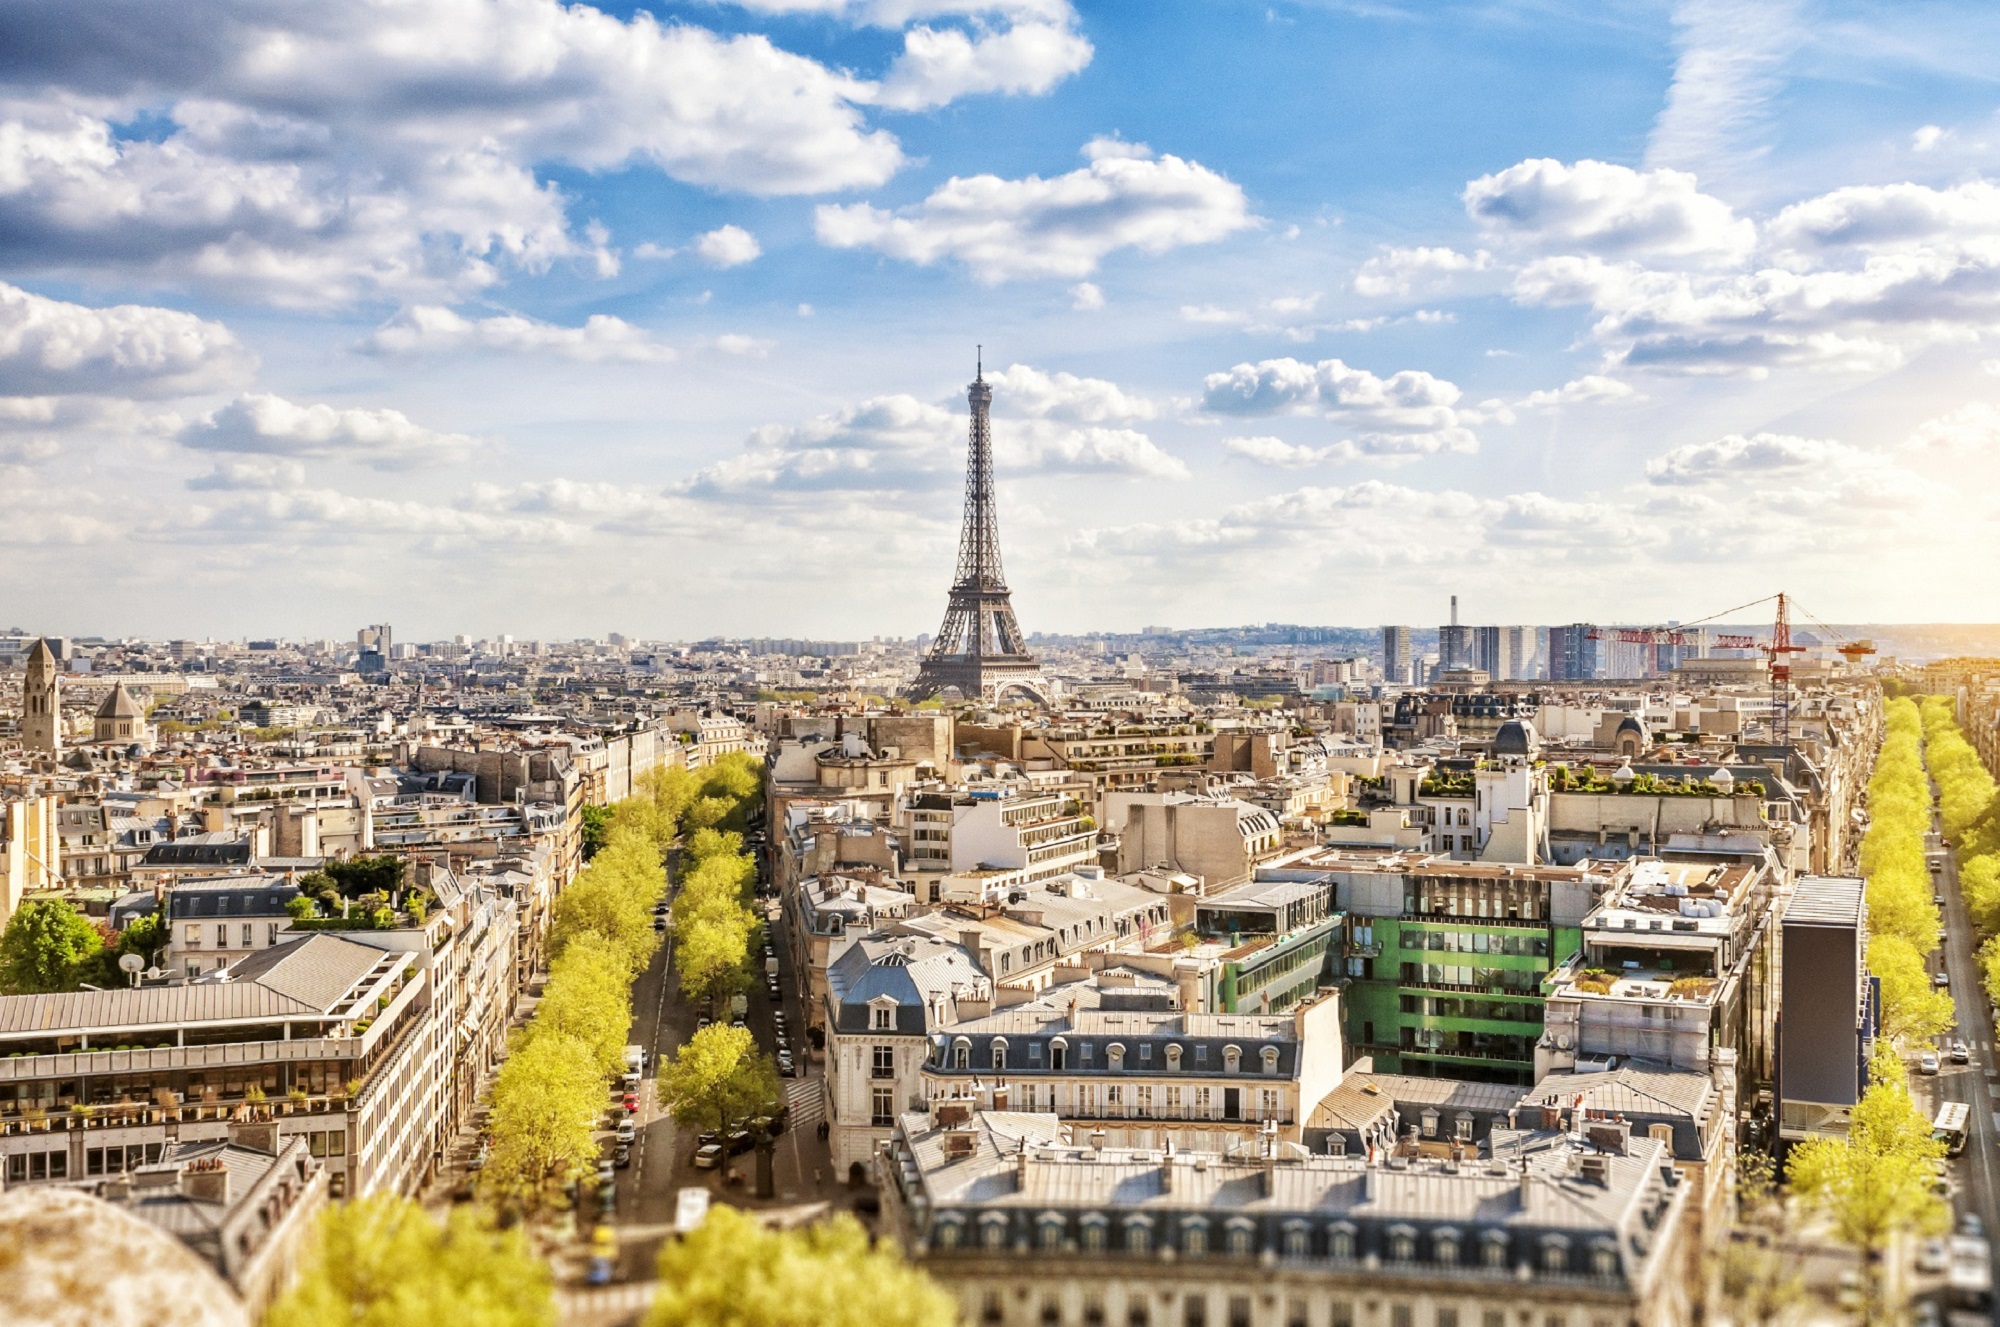 Сайты парижа. Париж панорама Эйфелева башня. Панорама эльфовой башни. Париж Эйфелева башня вид с города. Панорамный вид Парижа.